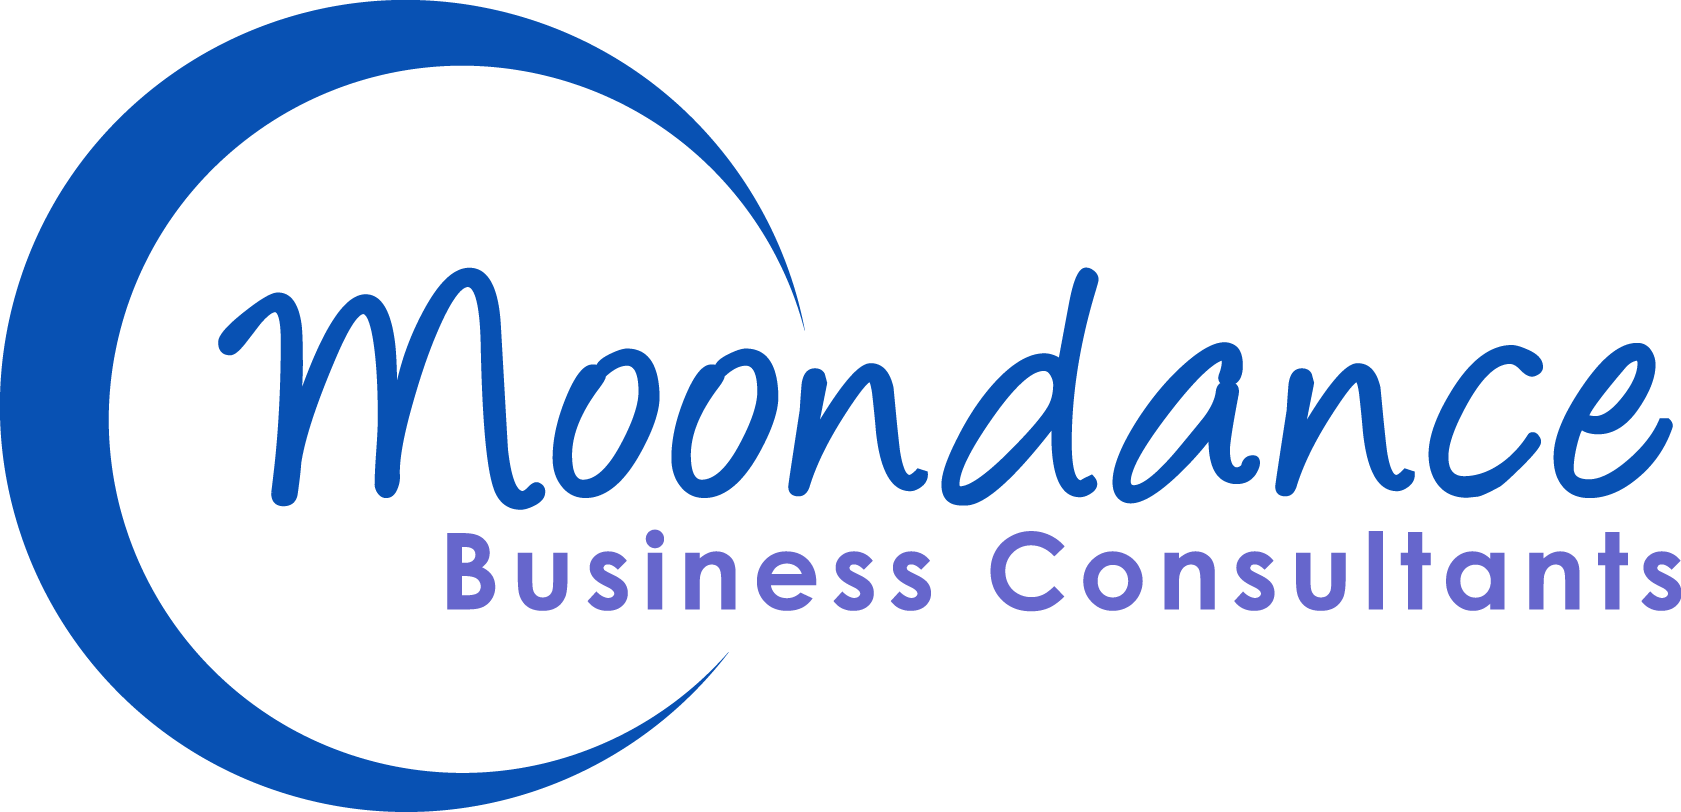 Moondance Business Consultants